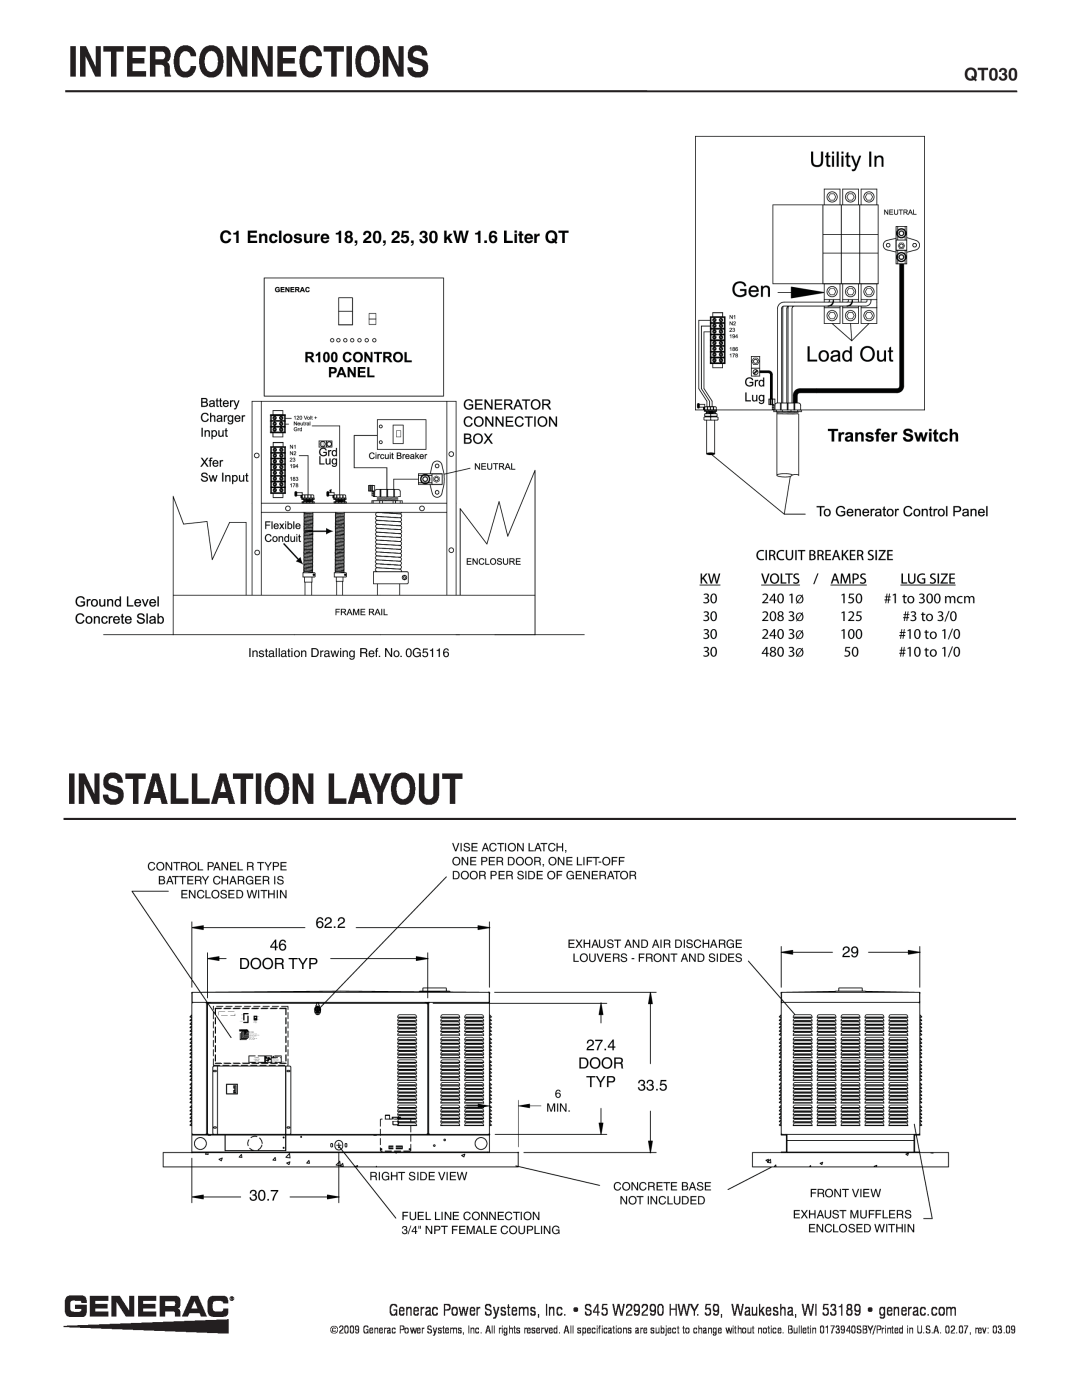 Generac QT030 manual Interconnections, Installation Layout, C1 Enclosure 18, 20, 25, 30 kW 1.6 Liter QT, 240 1 Ø, 208 3 Ø 